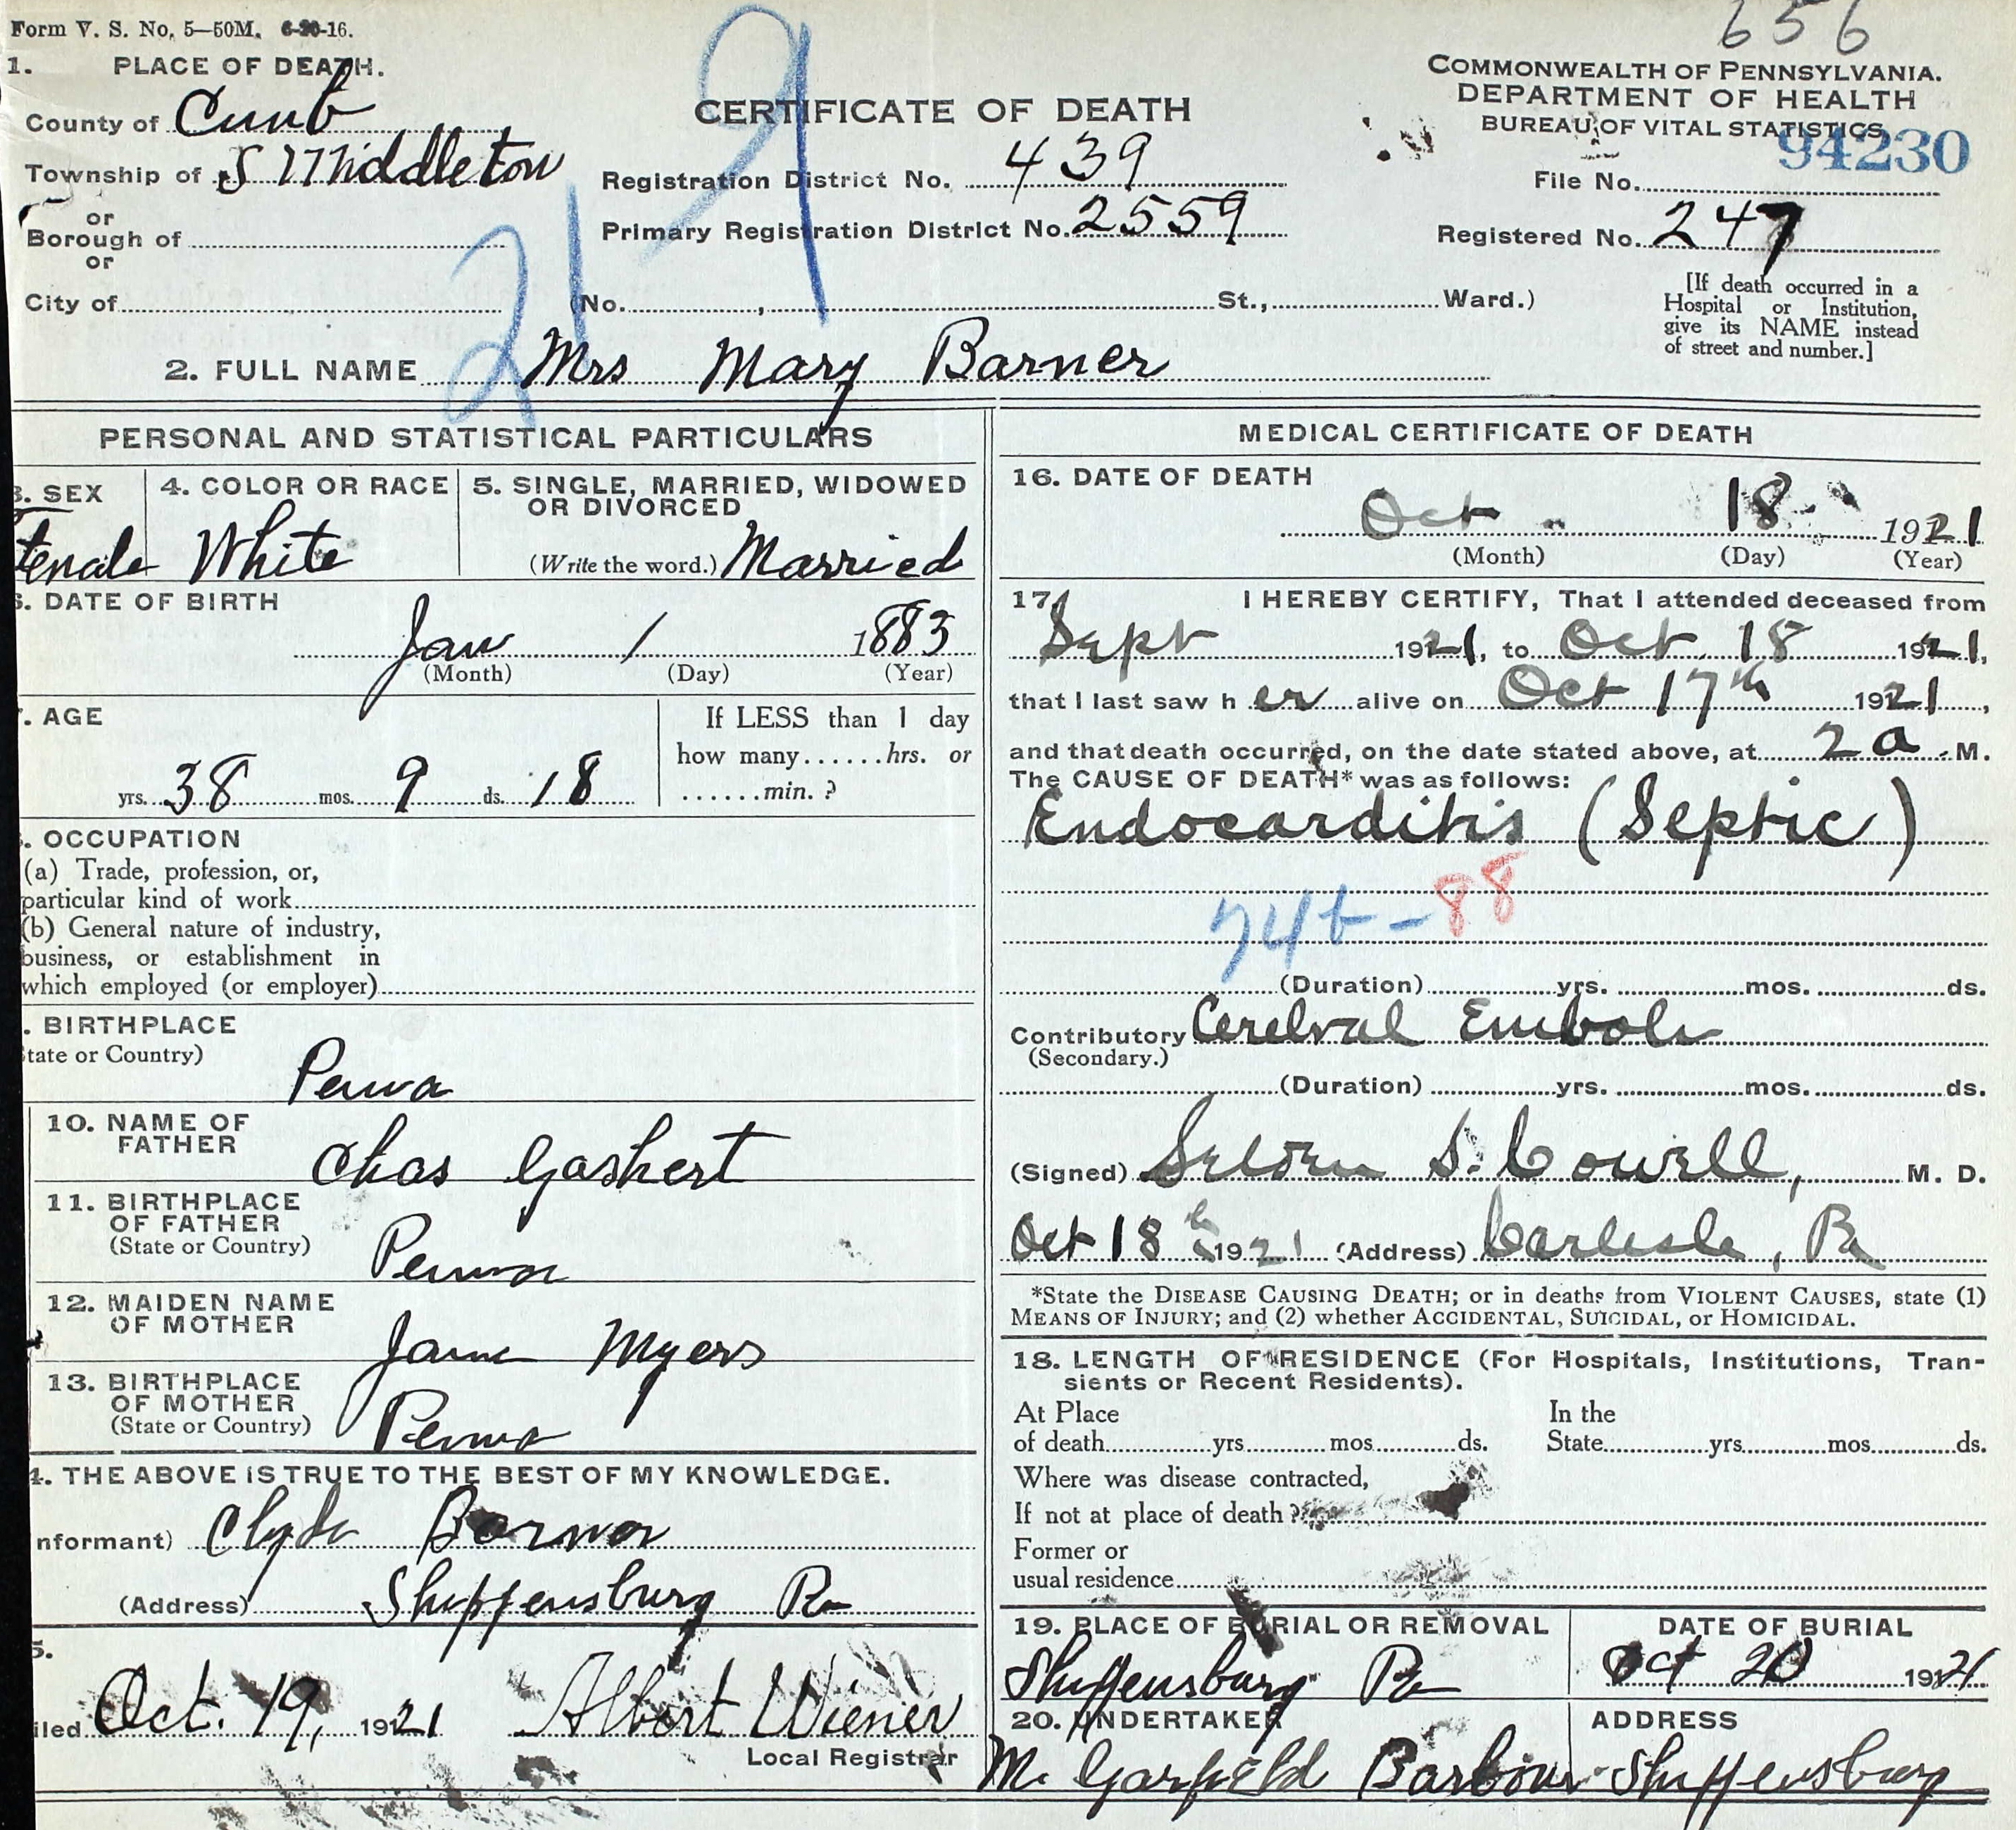 Mary Gashert Barner death certificate